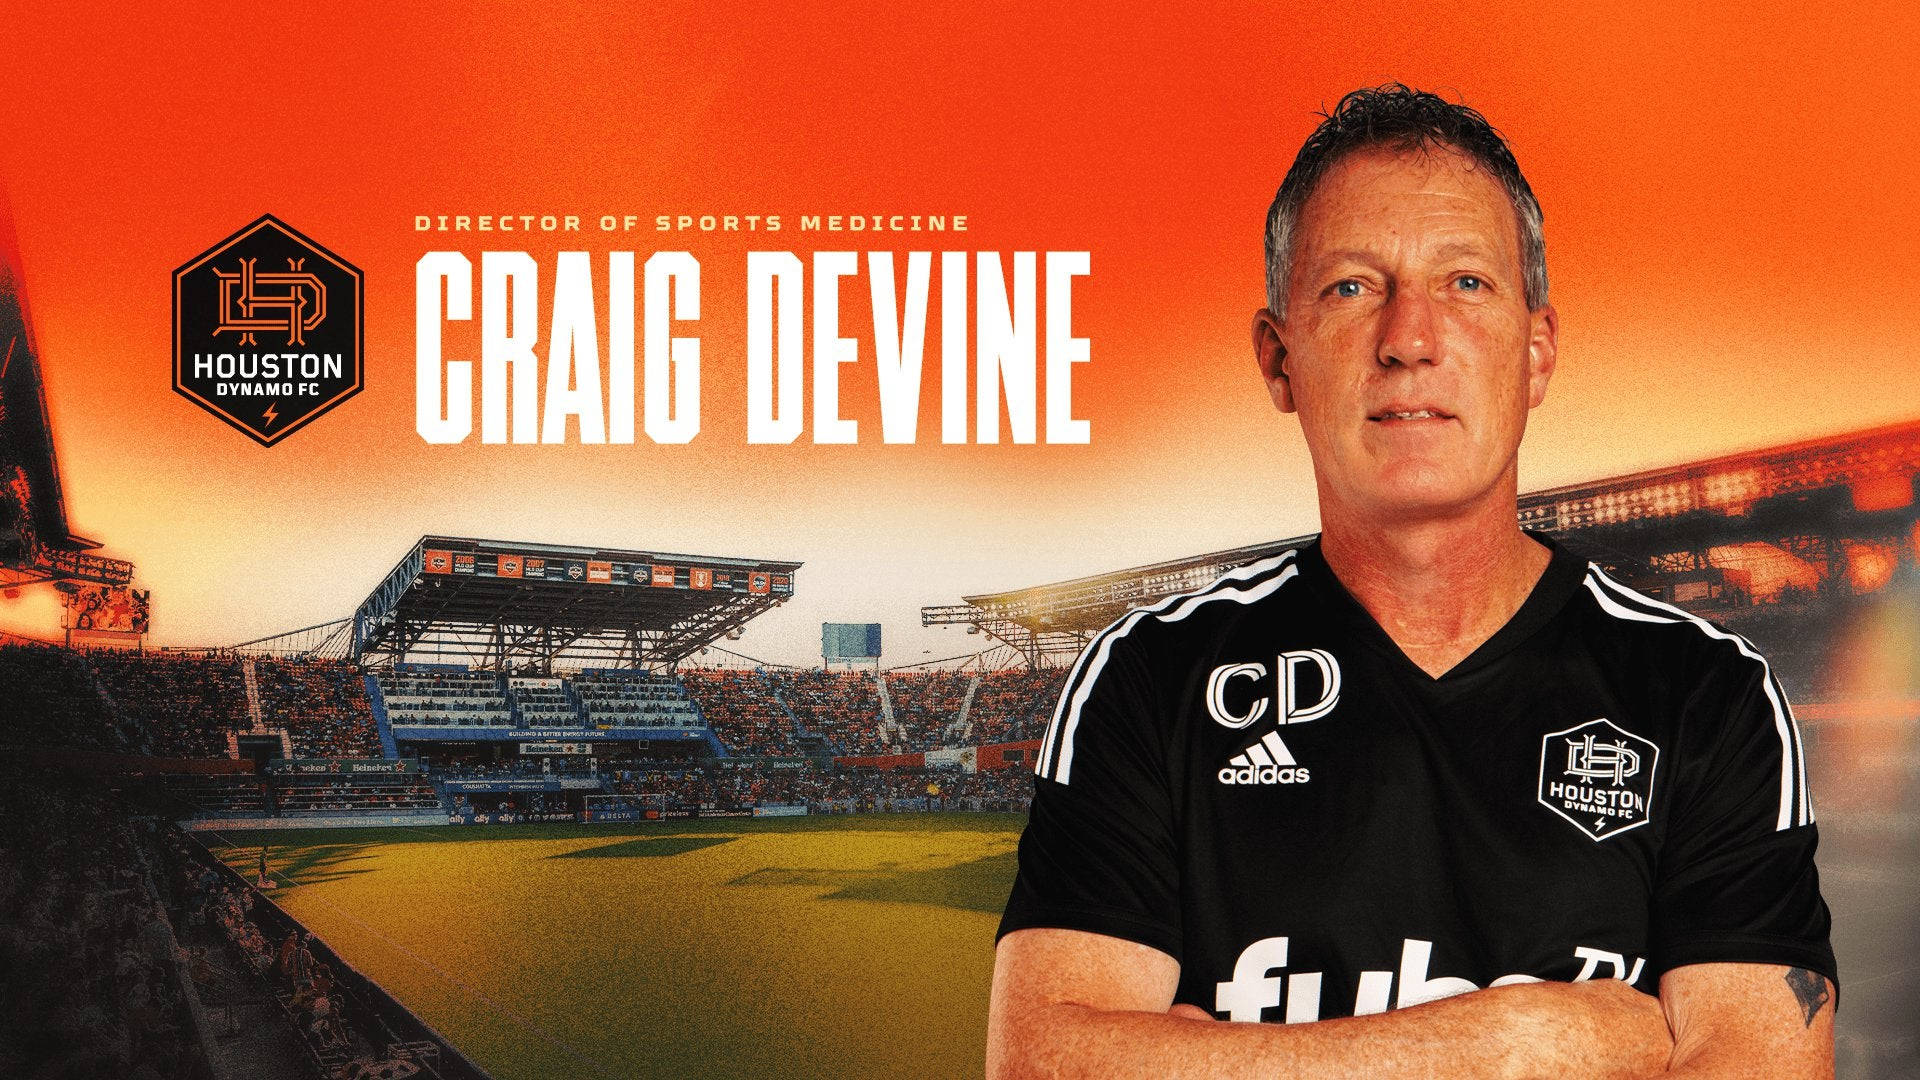 Houstondynamo Craig Devine: Houston Dynamo Craig Devine Wallpaper